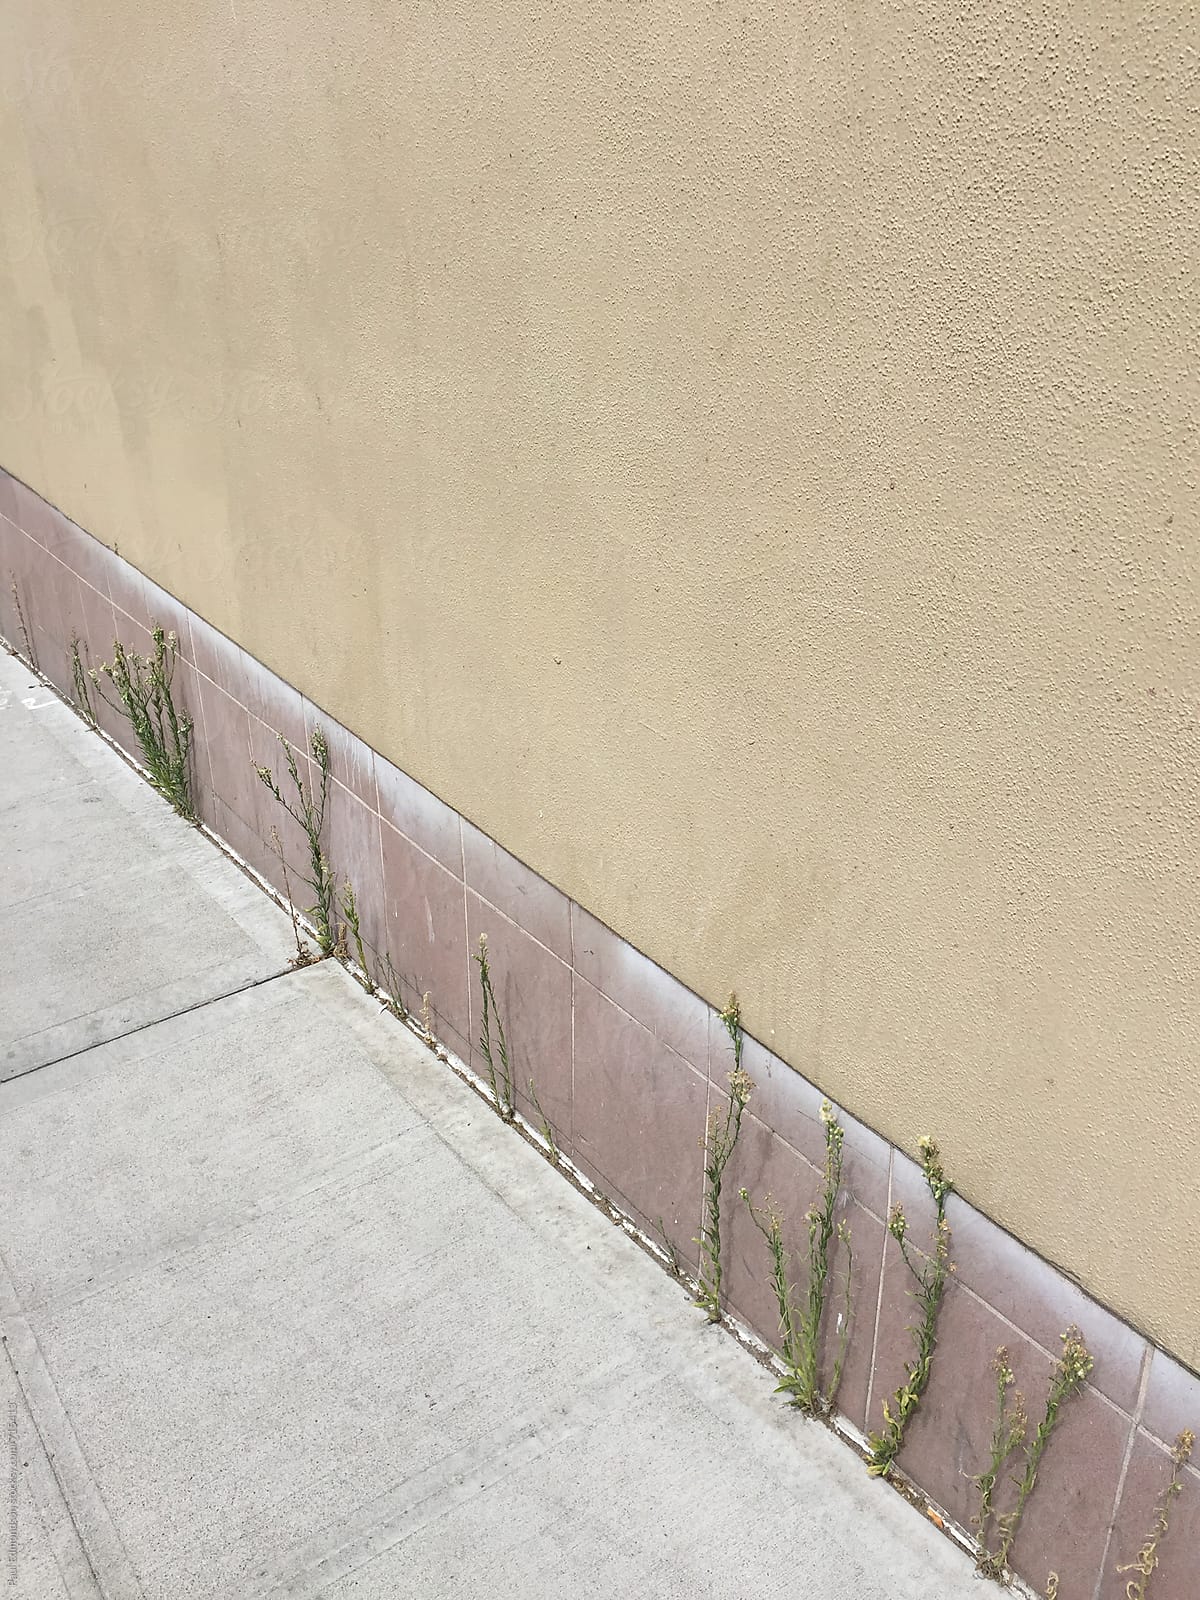 Weeds growing along urban sidewalk